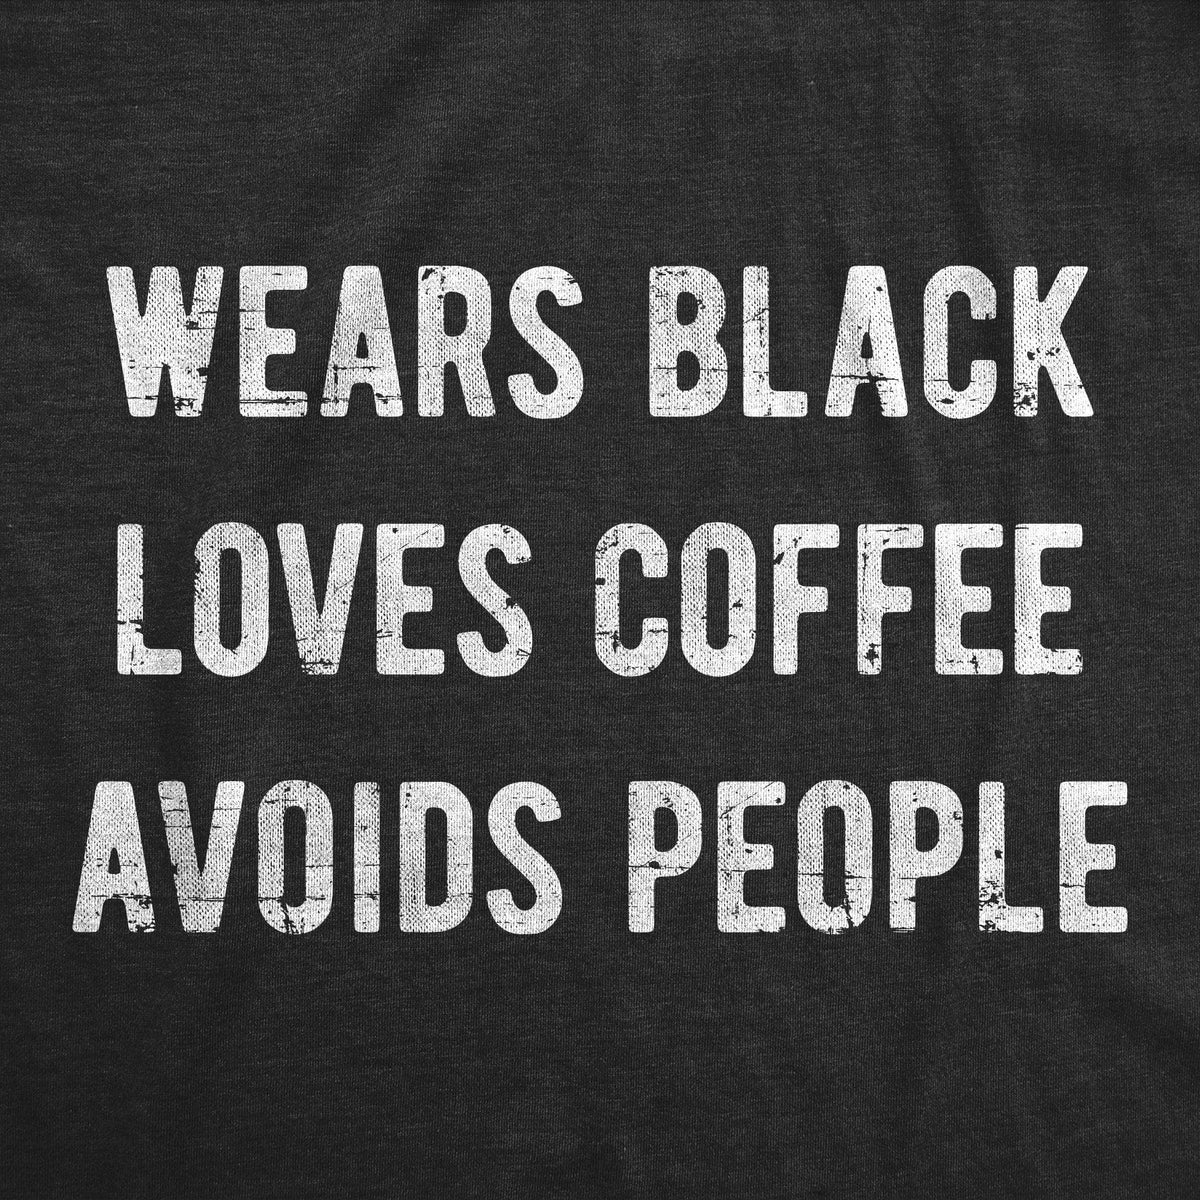 Wears Black Loves Coffee Women&#39;s Tshirt  -  Crazy Dog T-Shirts